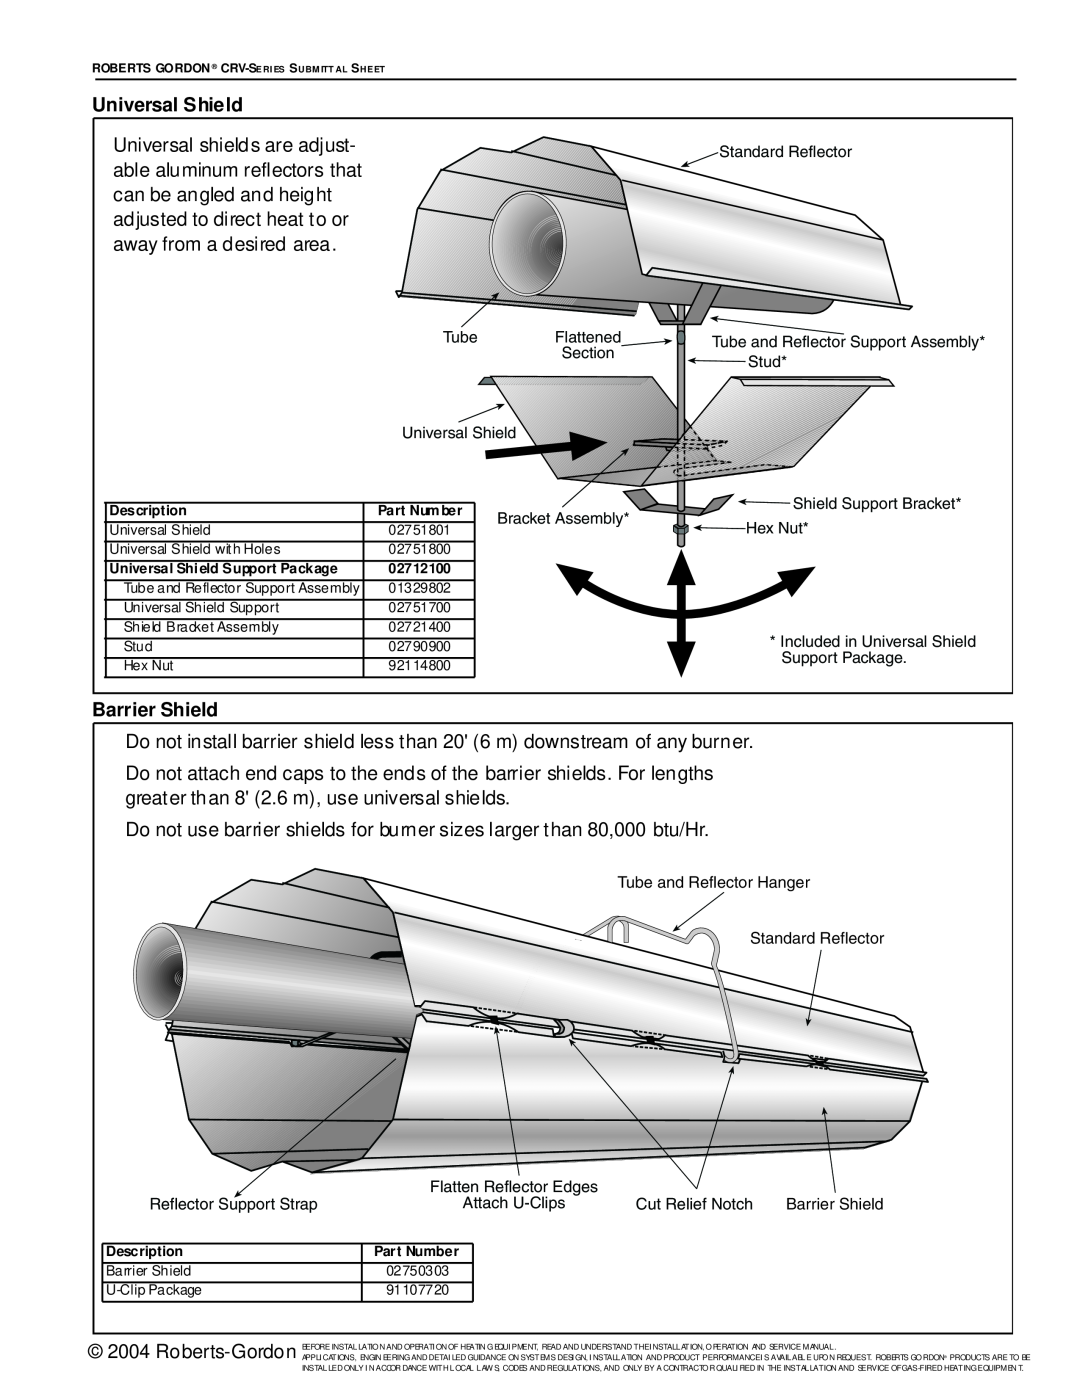 Roberts Gorden CRV-Series Universal Shield, Barrier Shield, Standard Reflector, Stud, Bracket Assembly, Hex Nut 